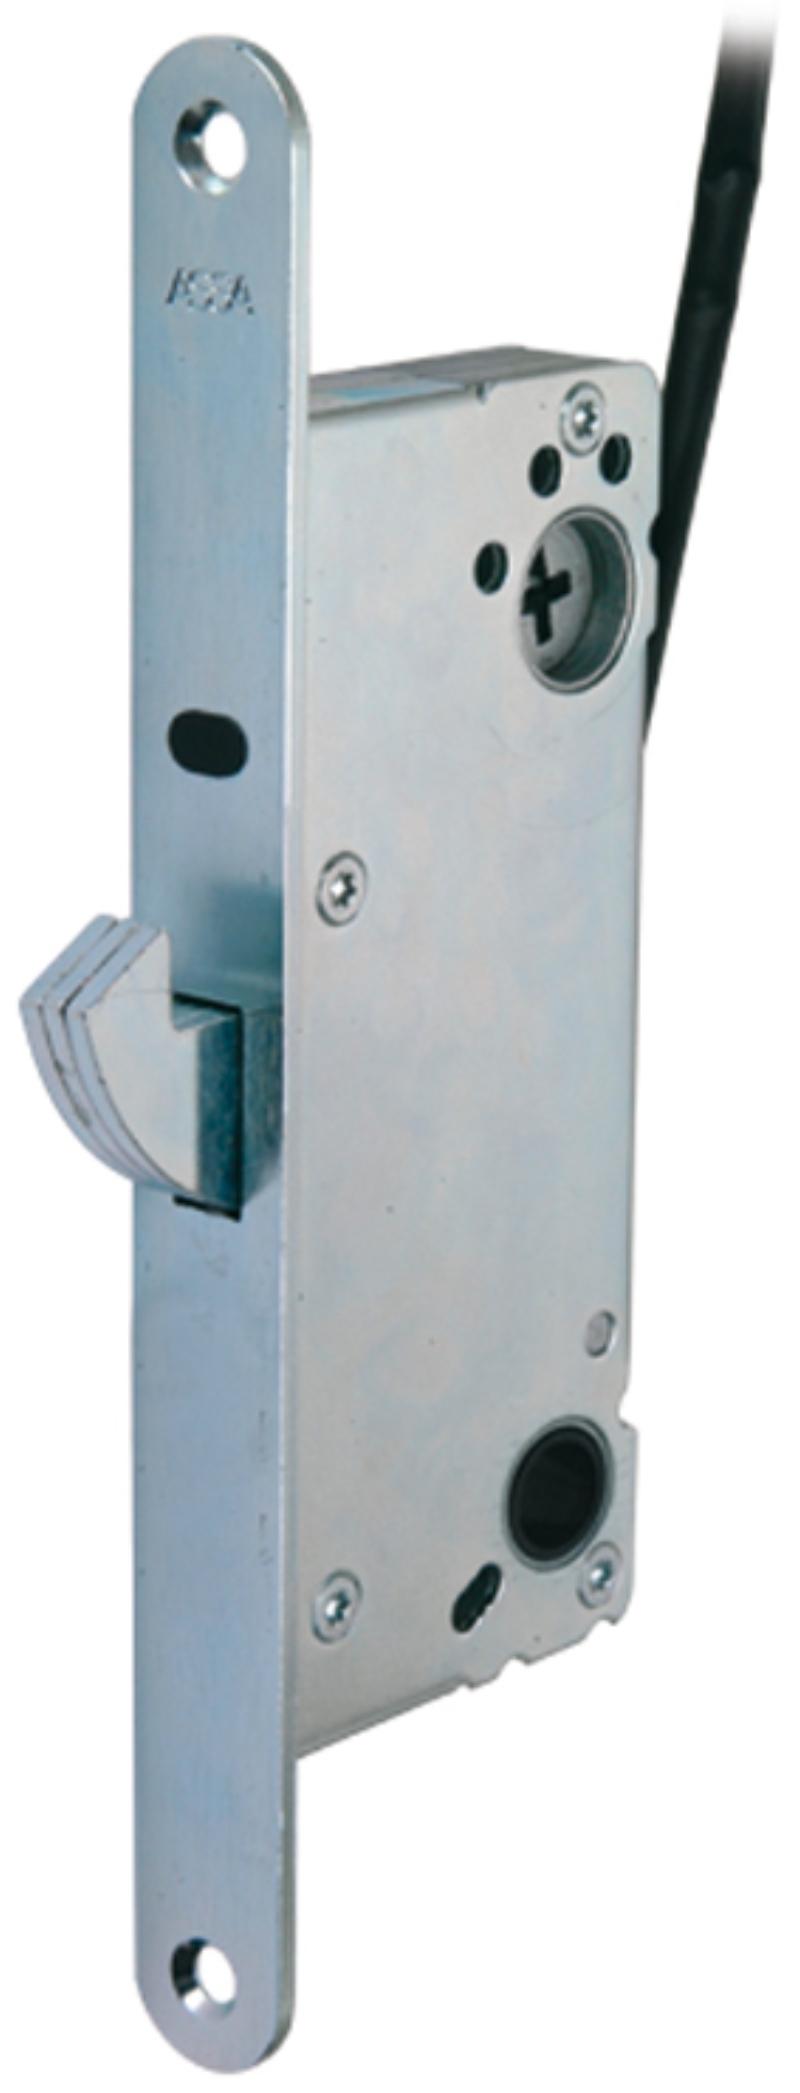 Assa motor lock Connect 811s/70 lock box (968848)